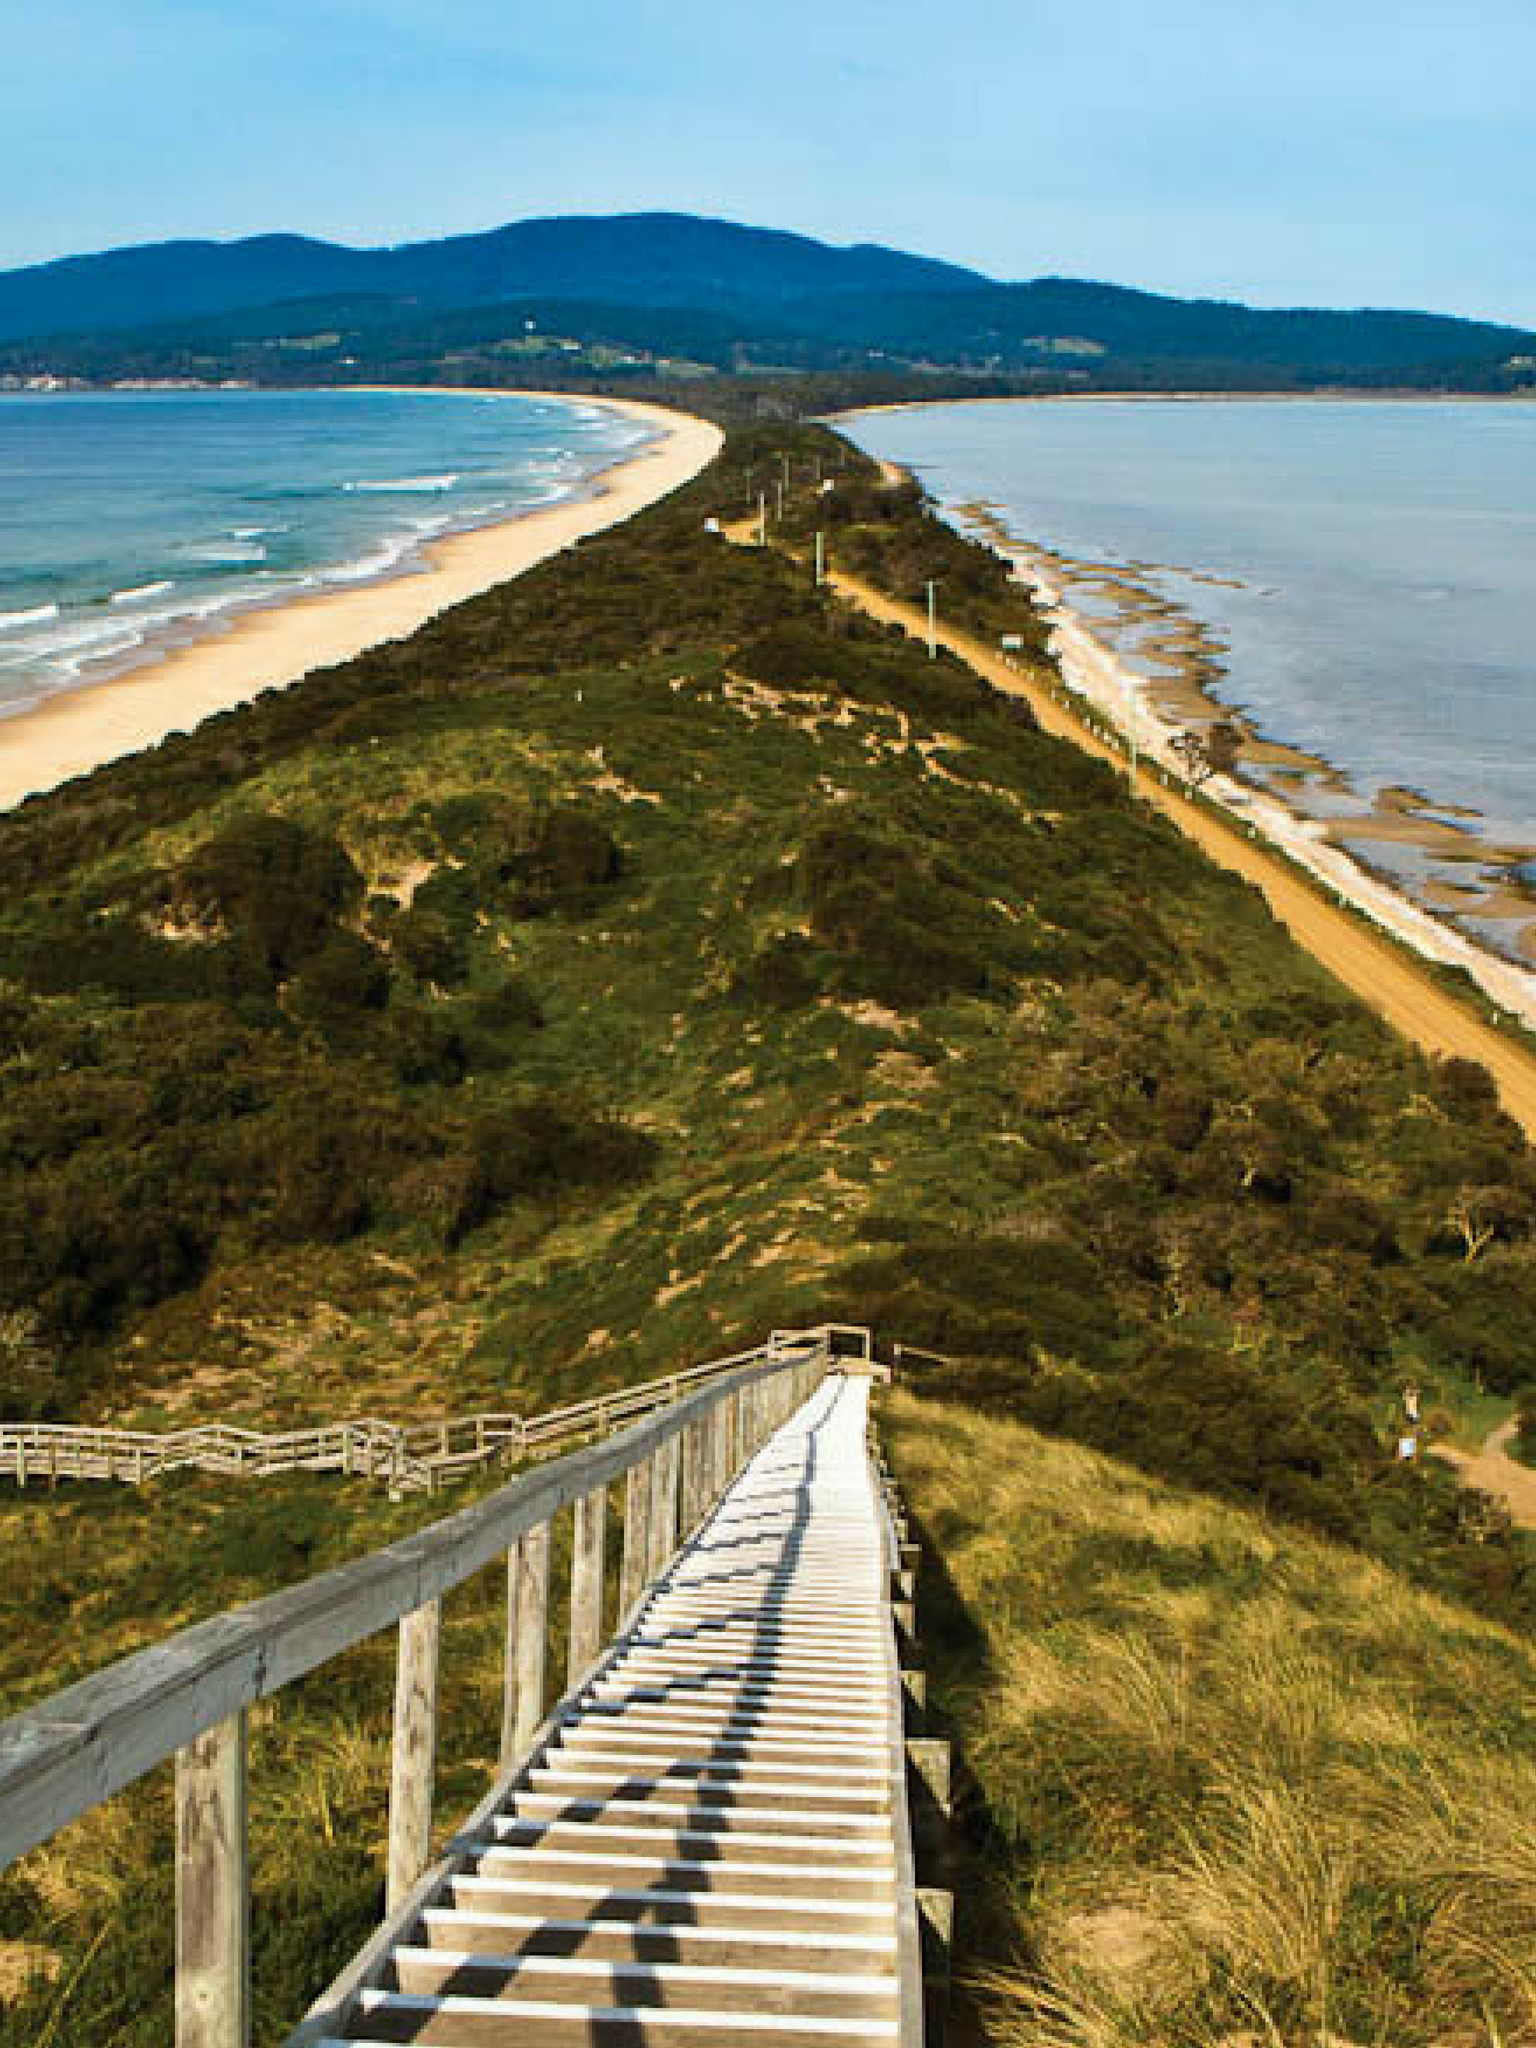 Hobart, Huon Valley & Bruny Island: An Insider's Guide to Tasmania